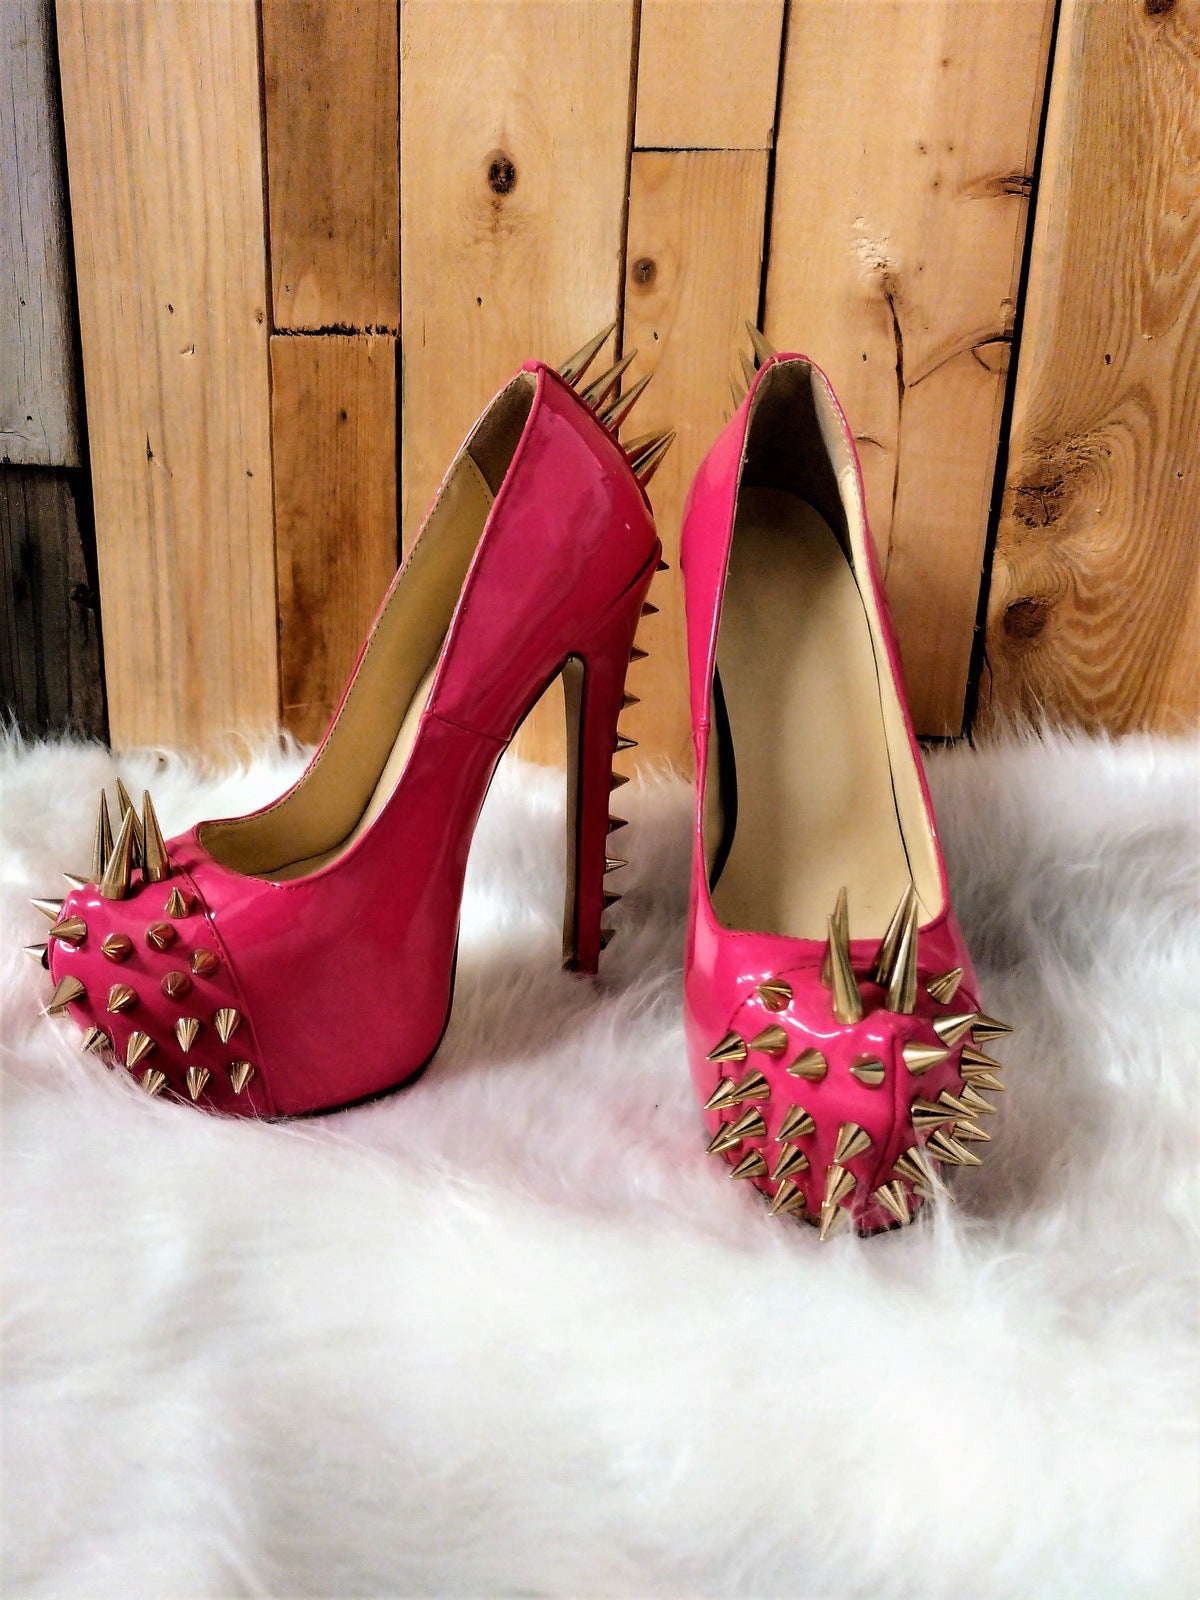 RUBY SHOO CINDERELLA SHOES 5 38 pink fuschia court high heels CHRISSIE BNIB  NEW £59.99 - PicClick UK